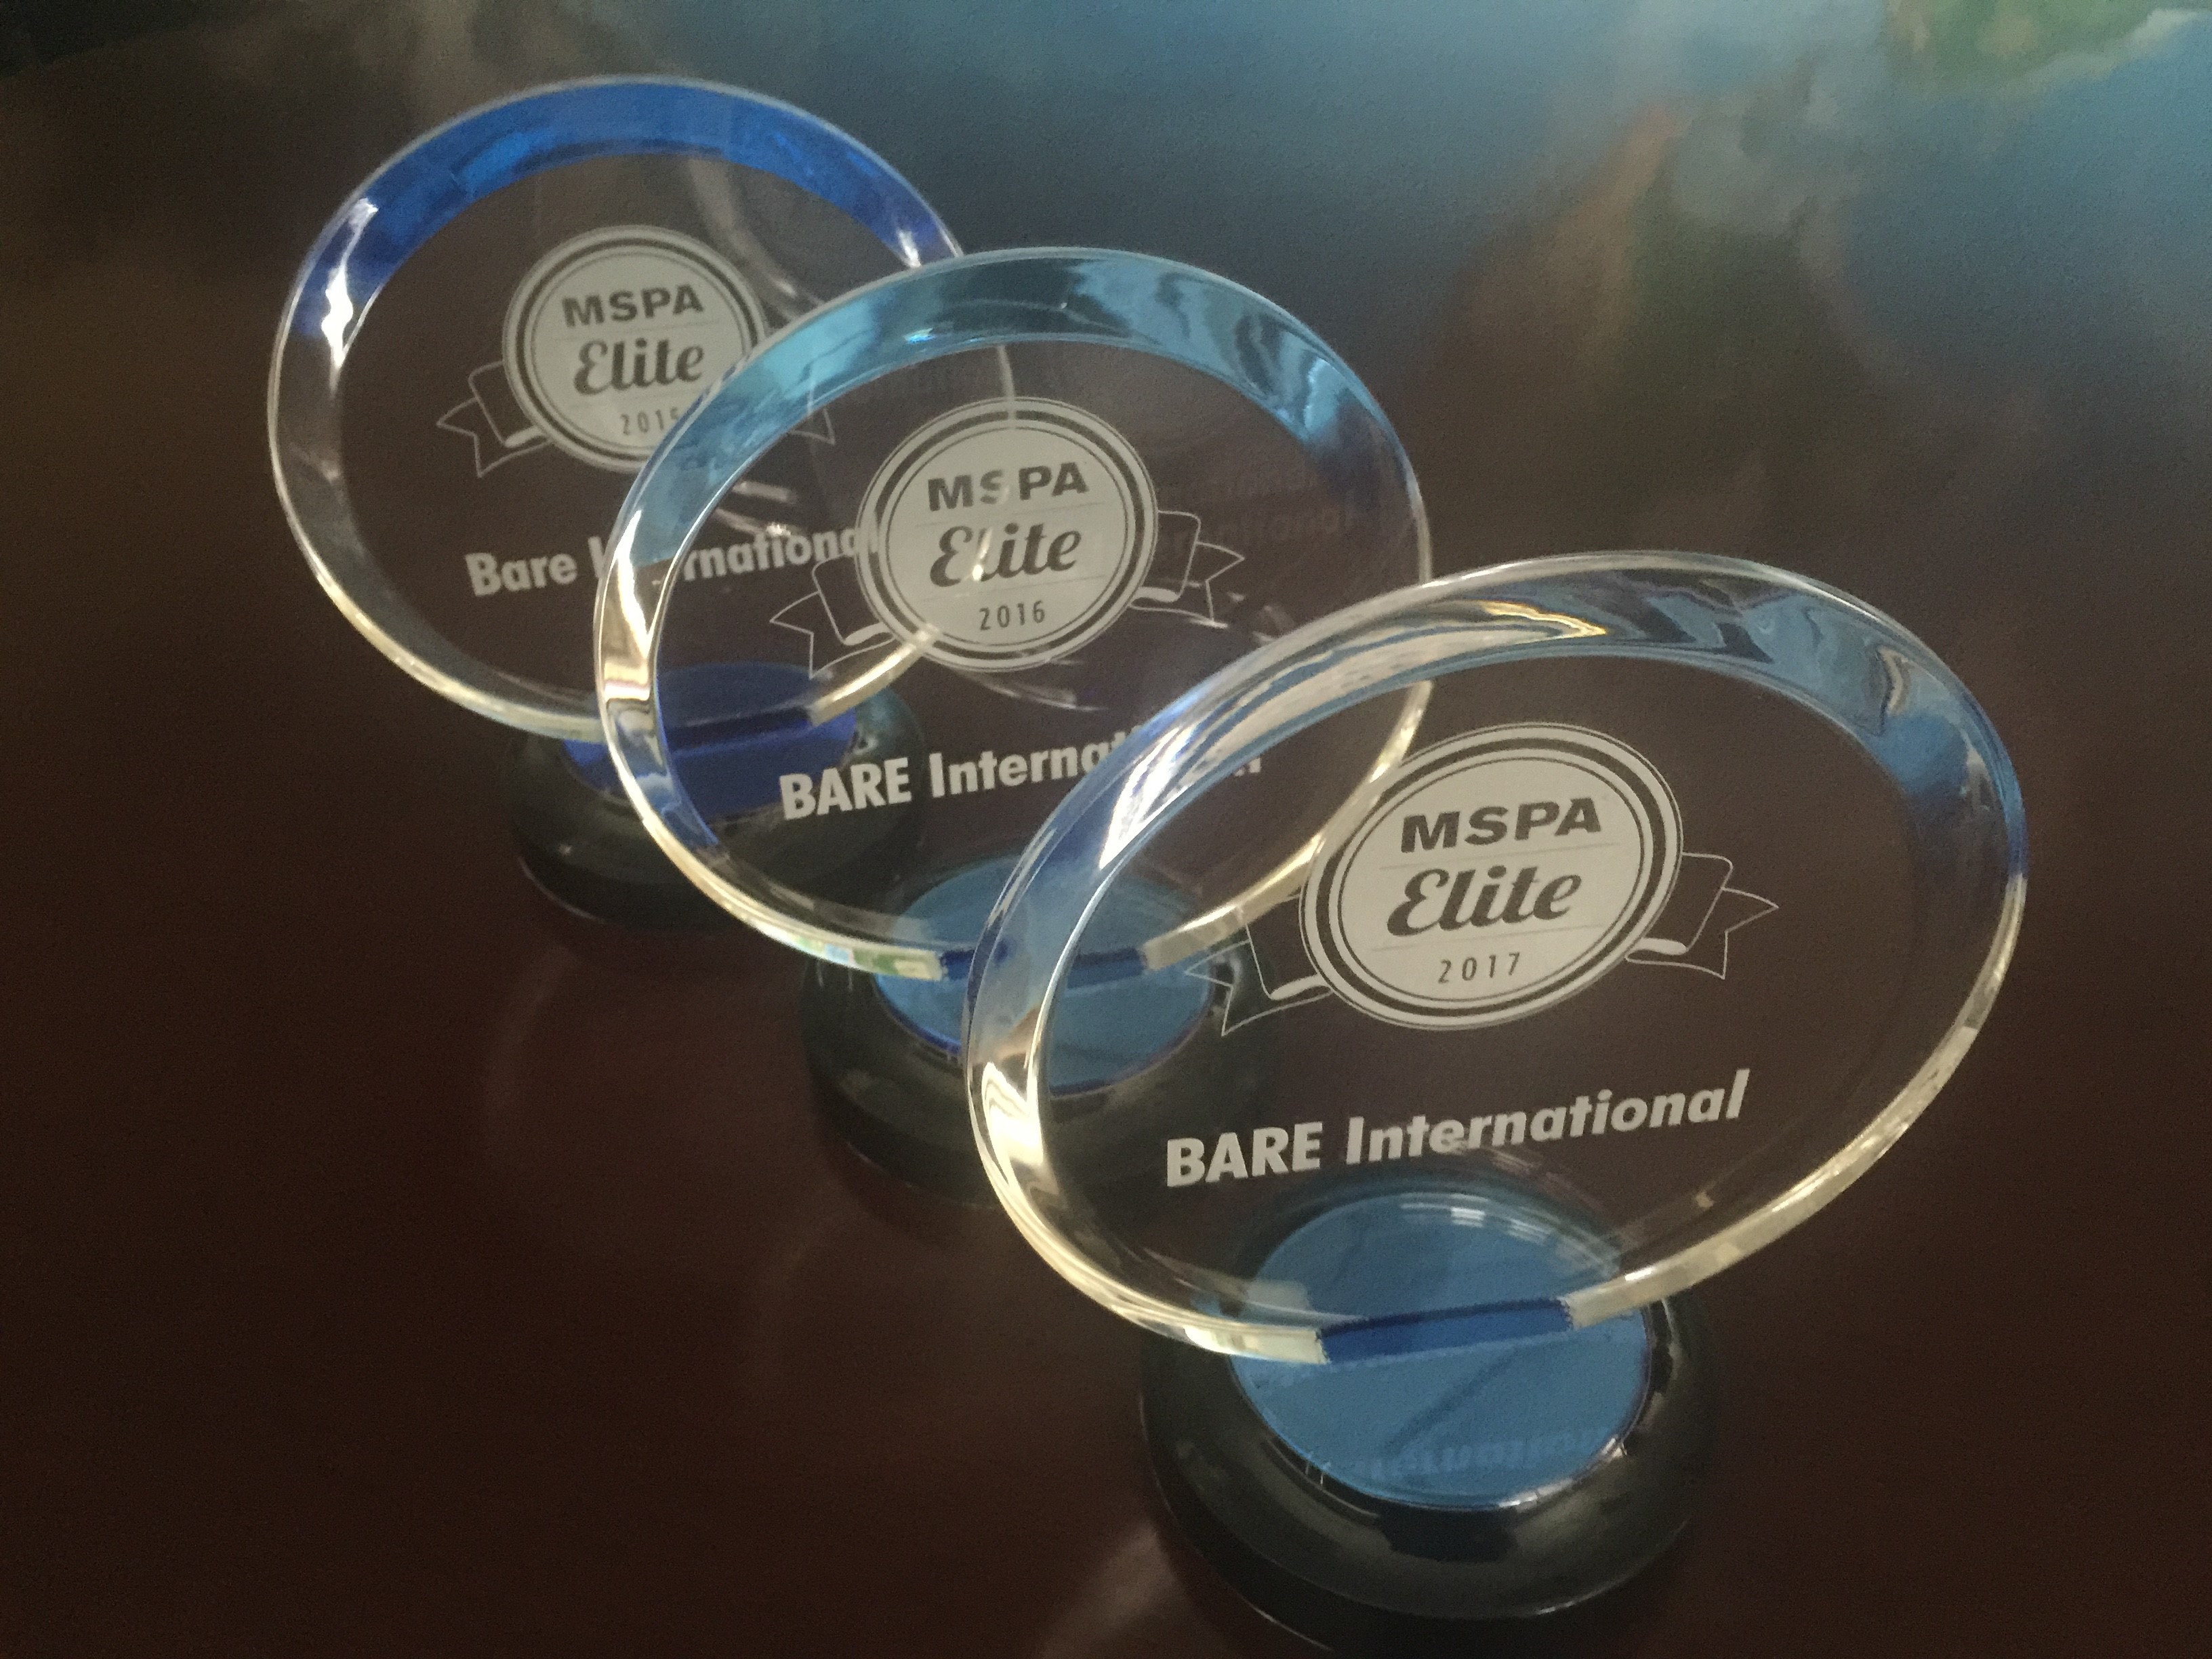 BARE International receives MSPA Elite Award for third consecutive year.